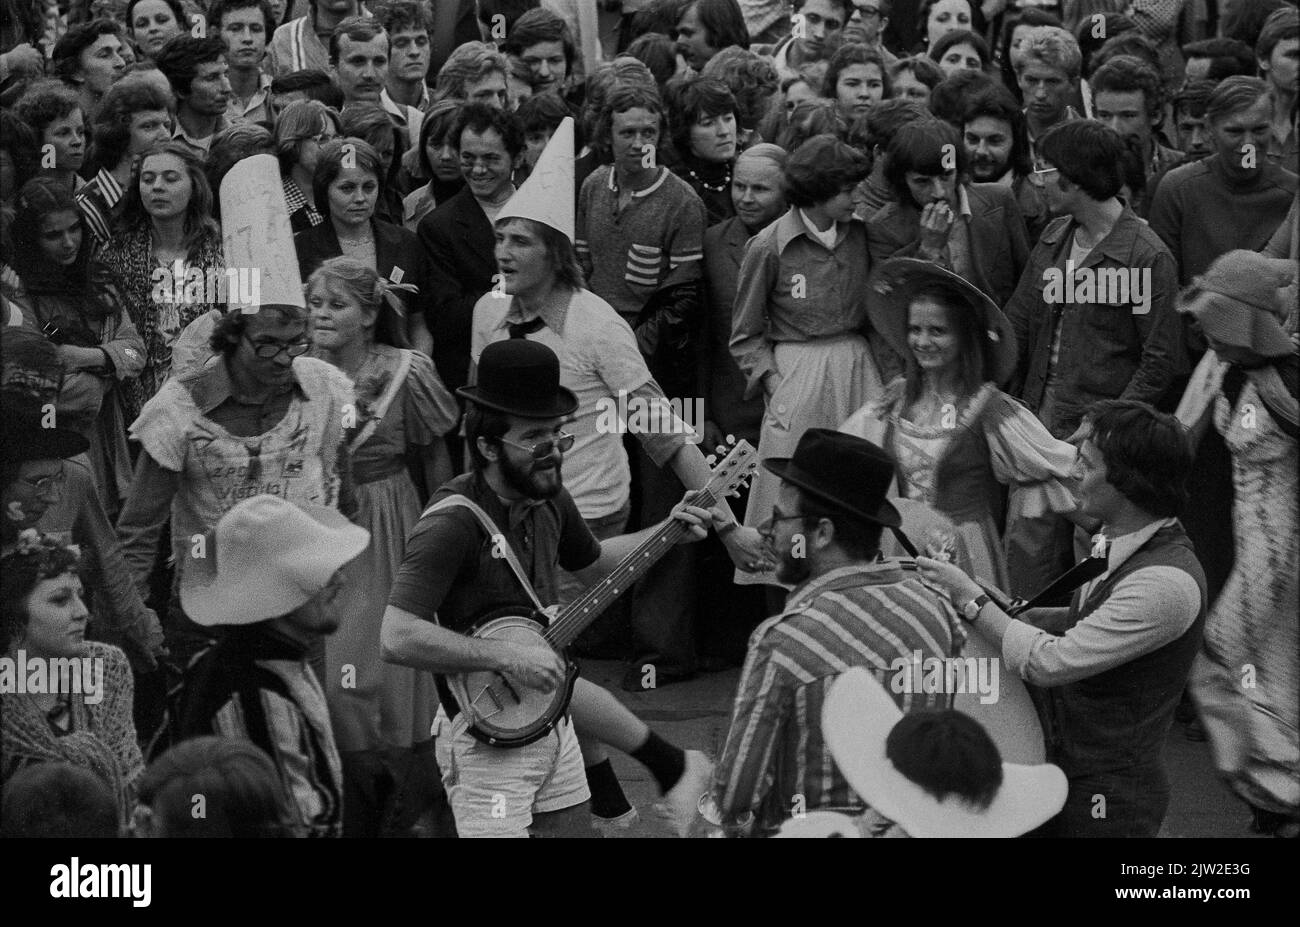 Polen, Krakau, 22. 06. 1977, Studentenfasching Juwenalia, Band mit Banjo, Publikum, Tanz Stockfoto